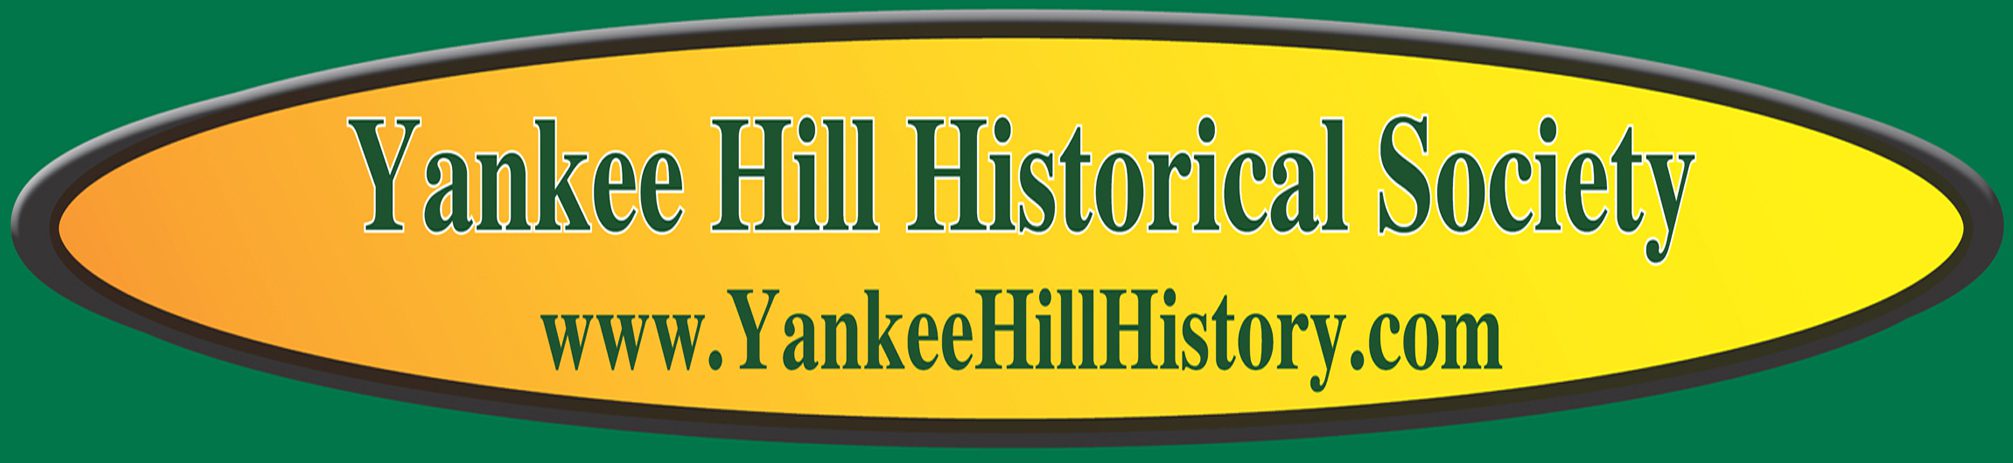 Yankee Hill Historical Society